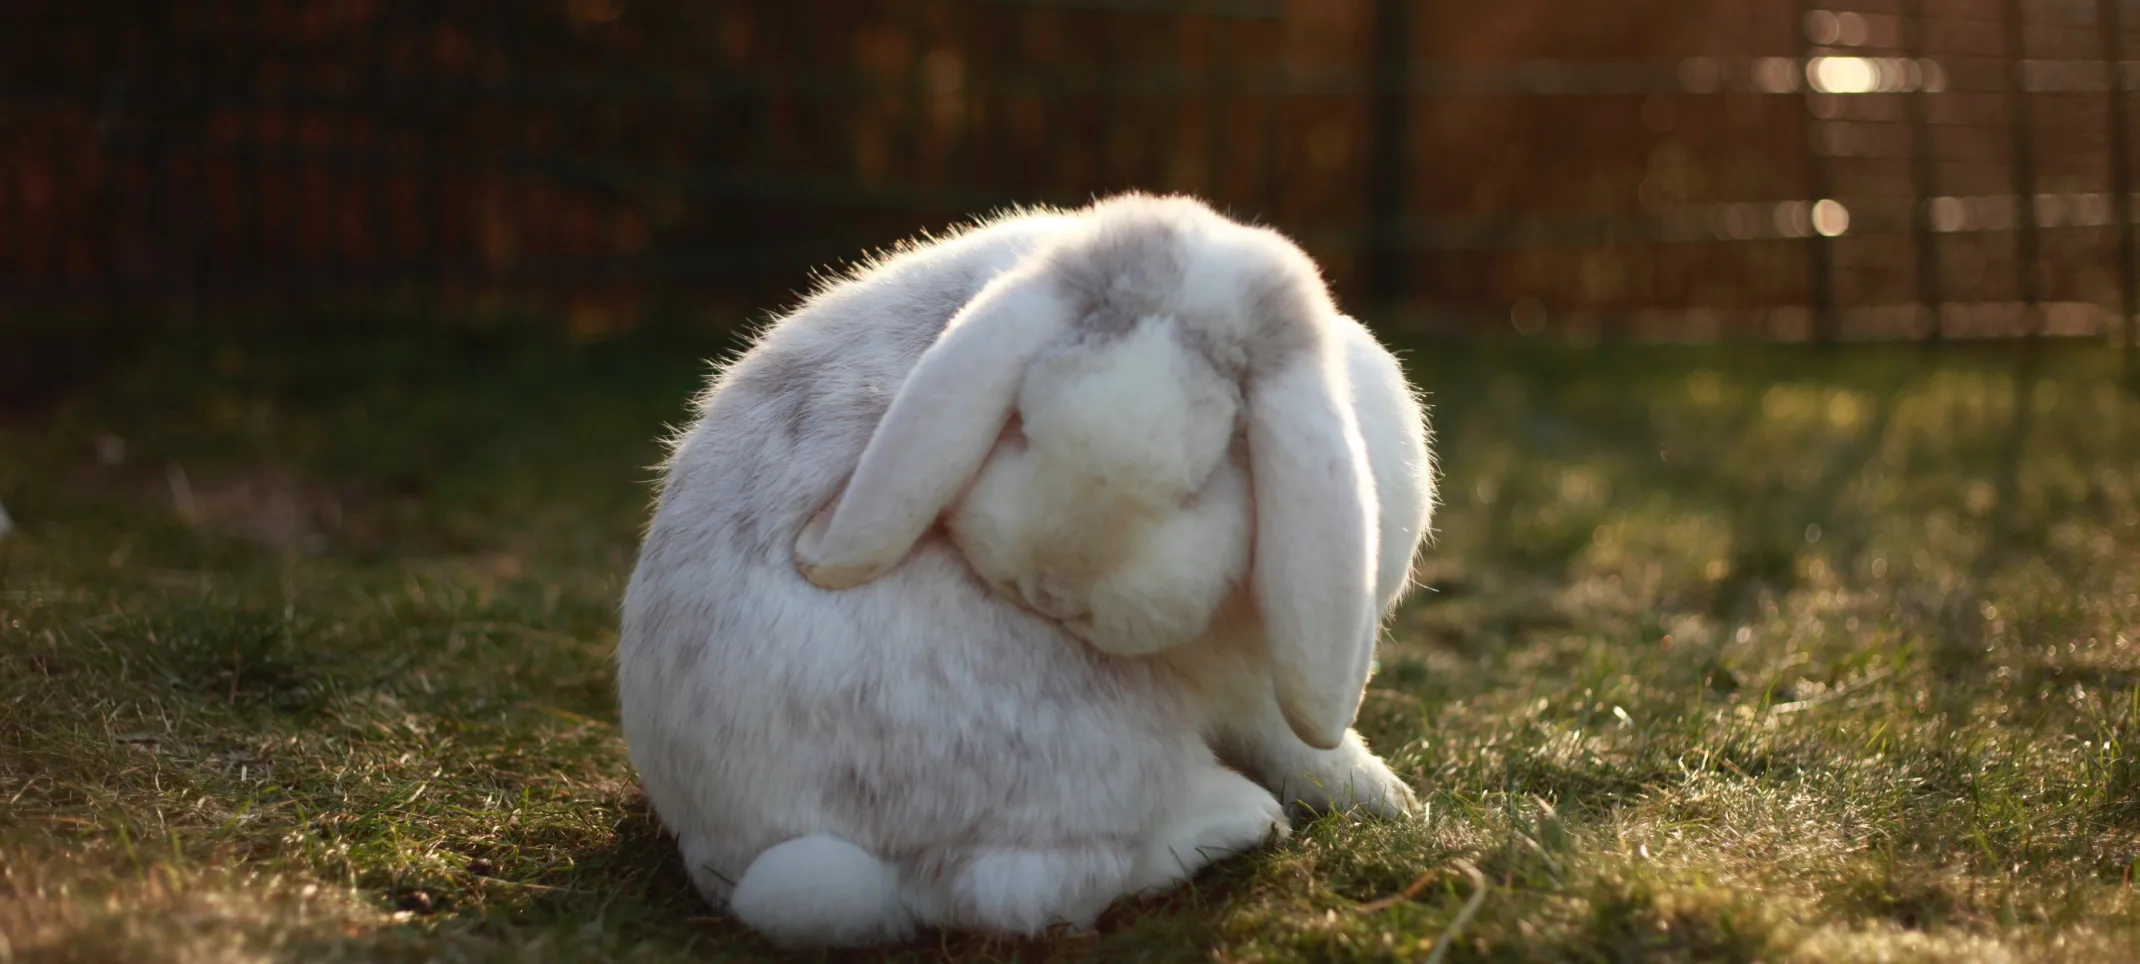 White rabbit sitting in the grass